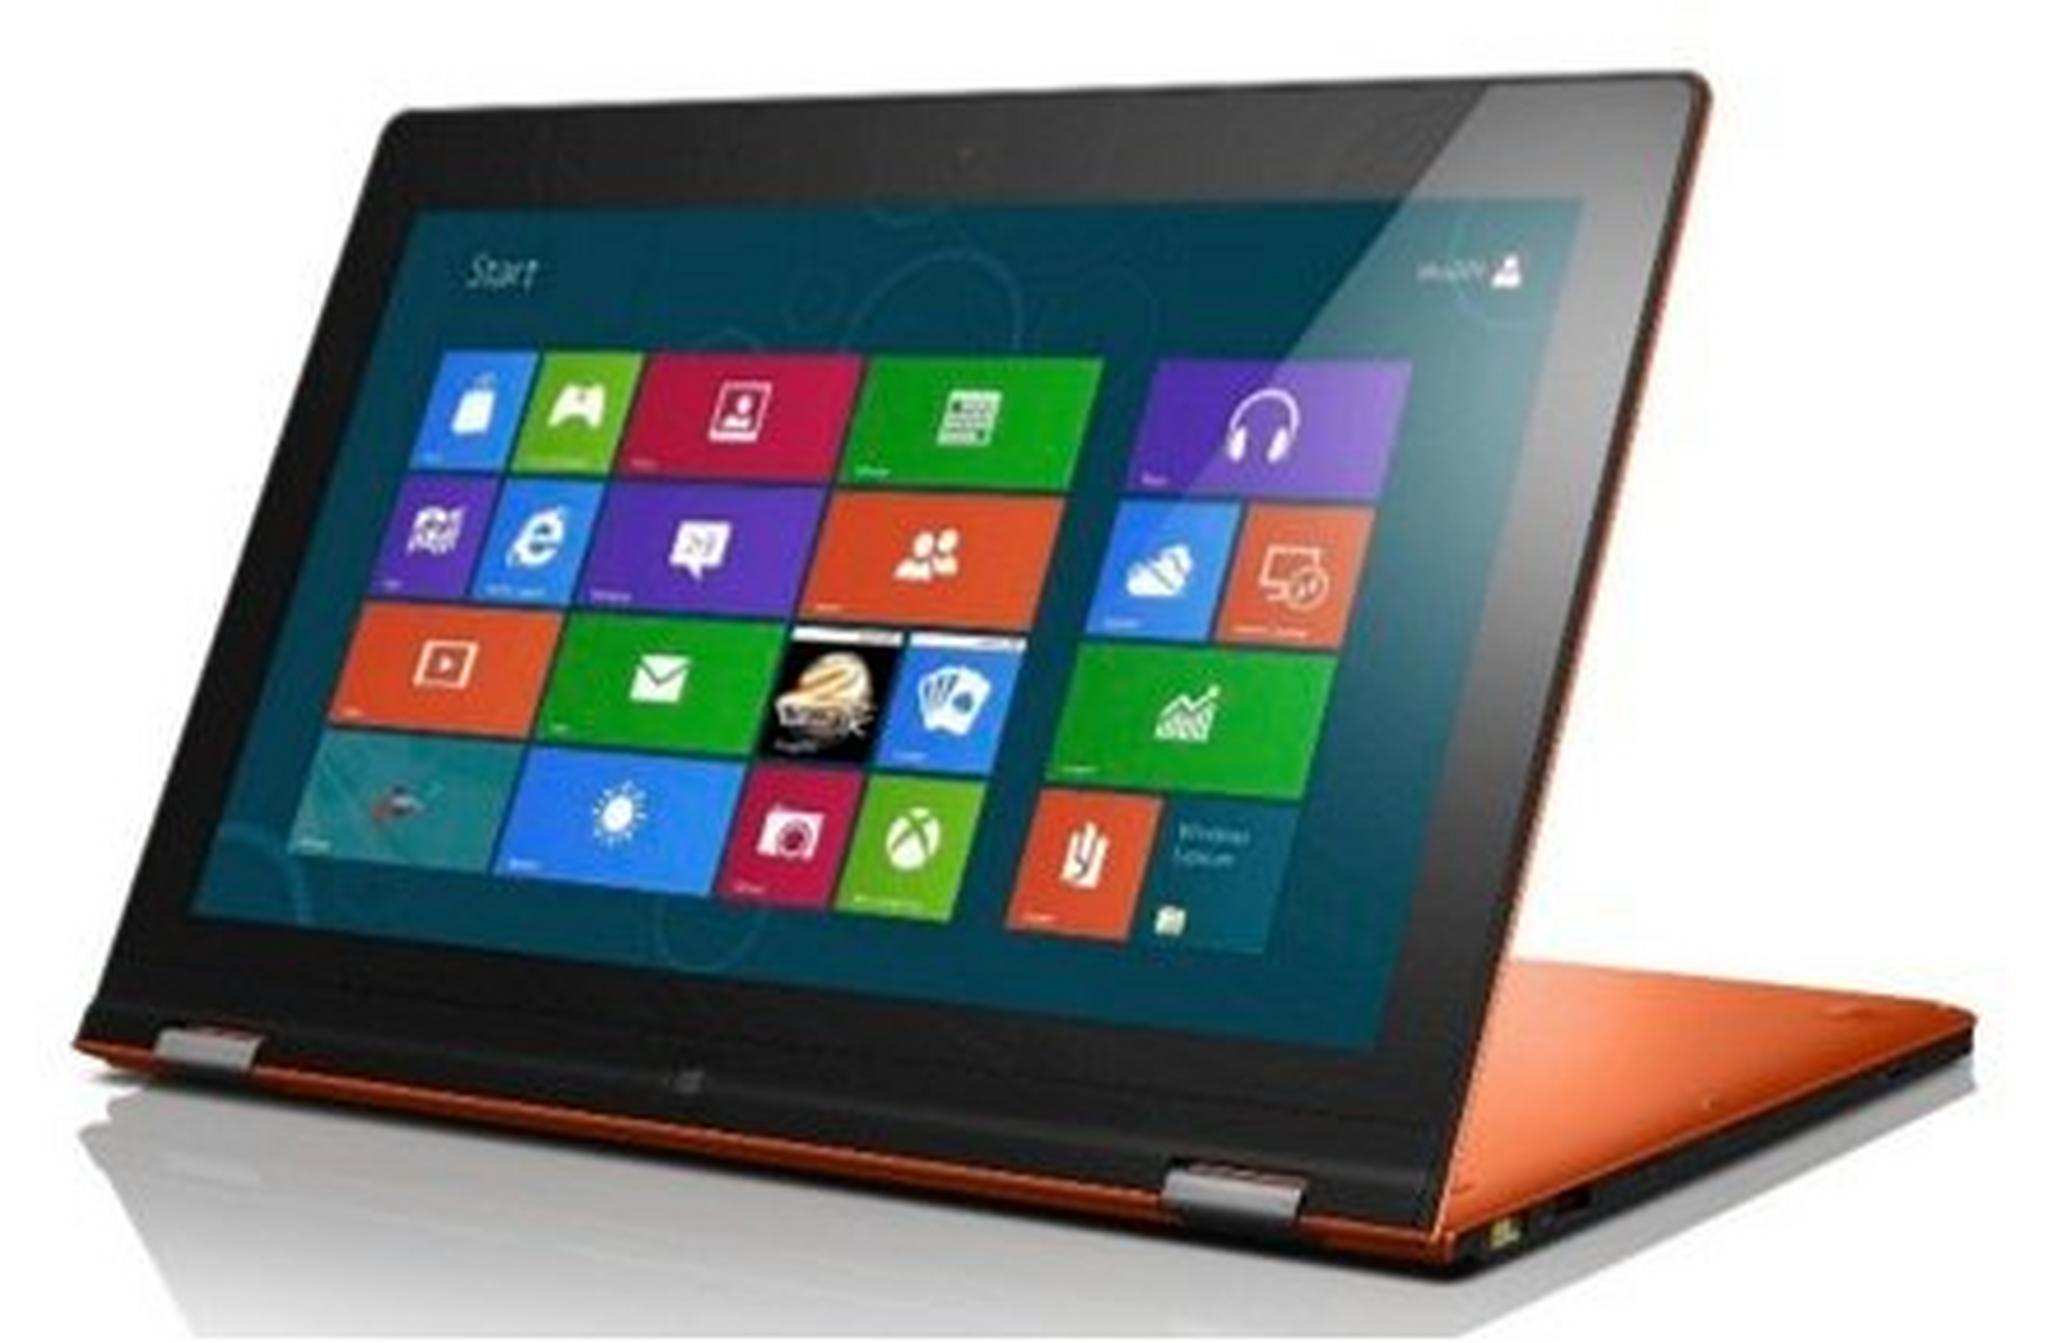 Lenovo Yoga Pro 3 Core i7 8GB RAM 256GB SSD 13.3-inch Touchscreen Convertible Laptop - Orange